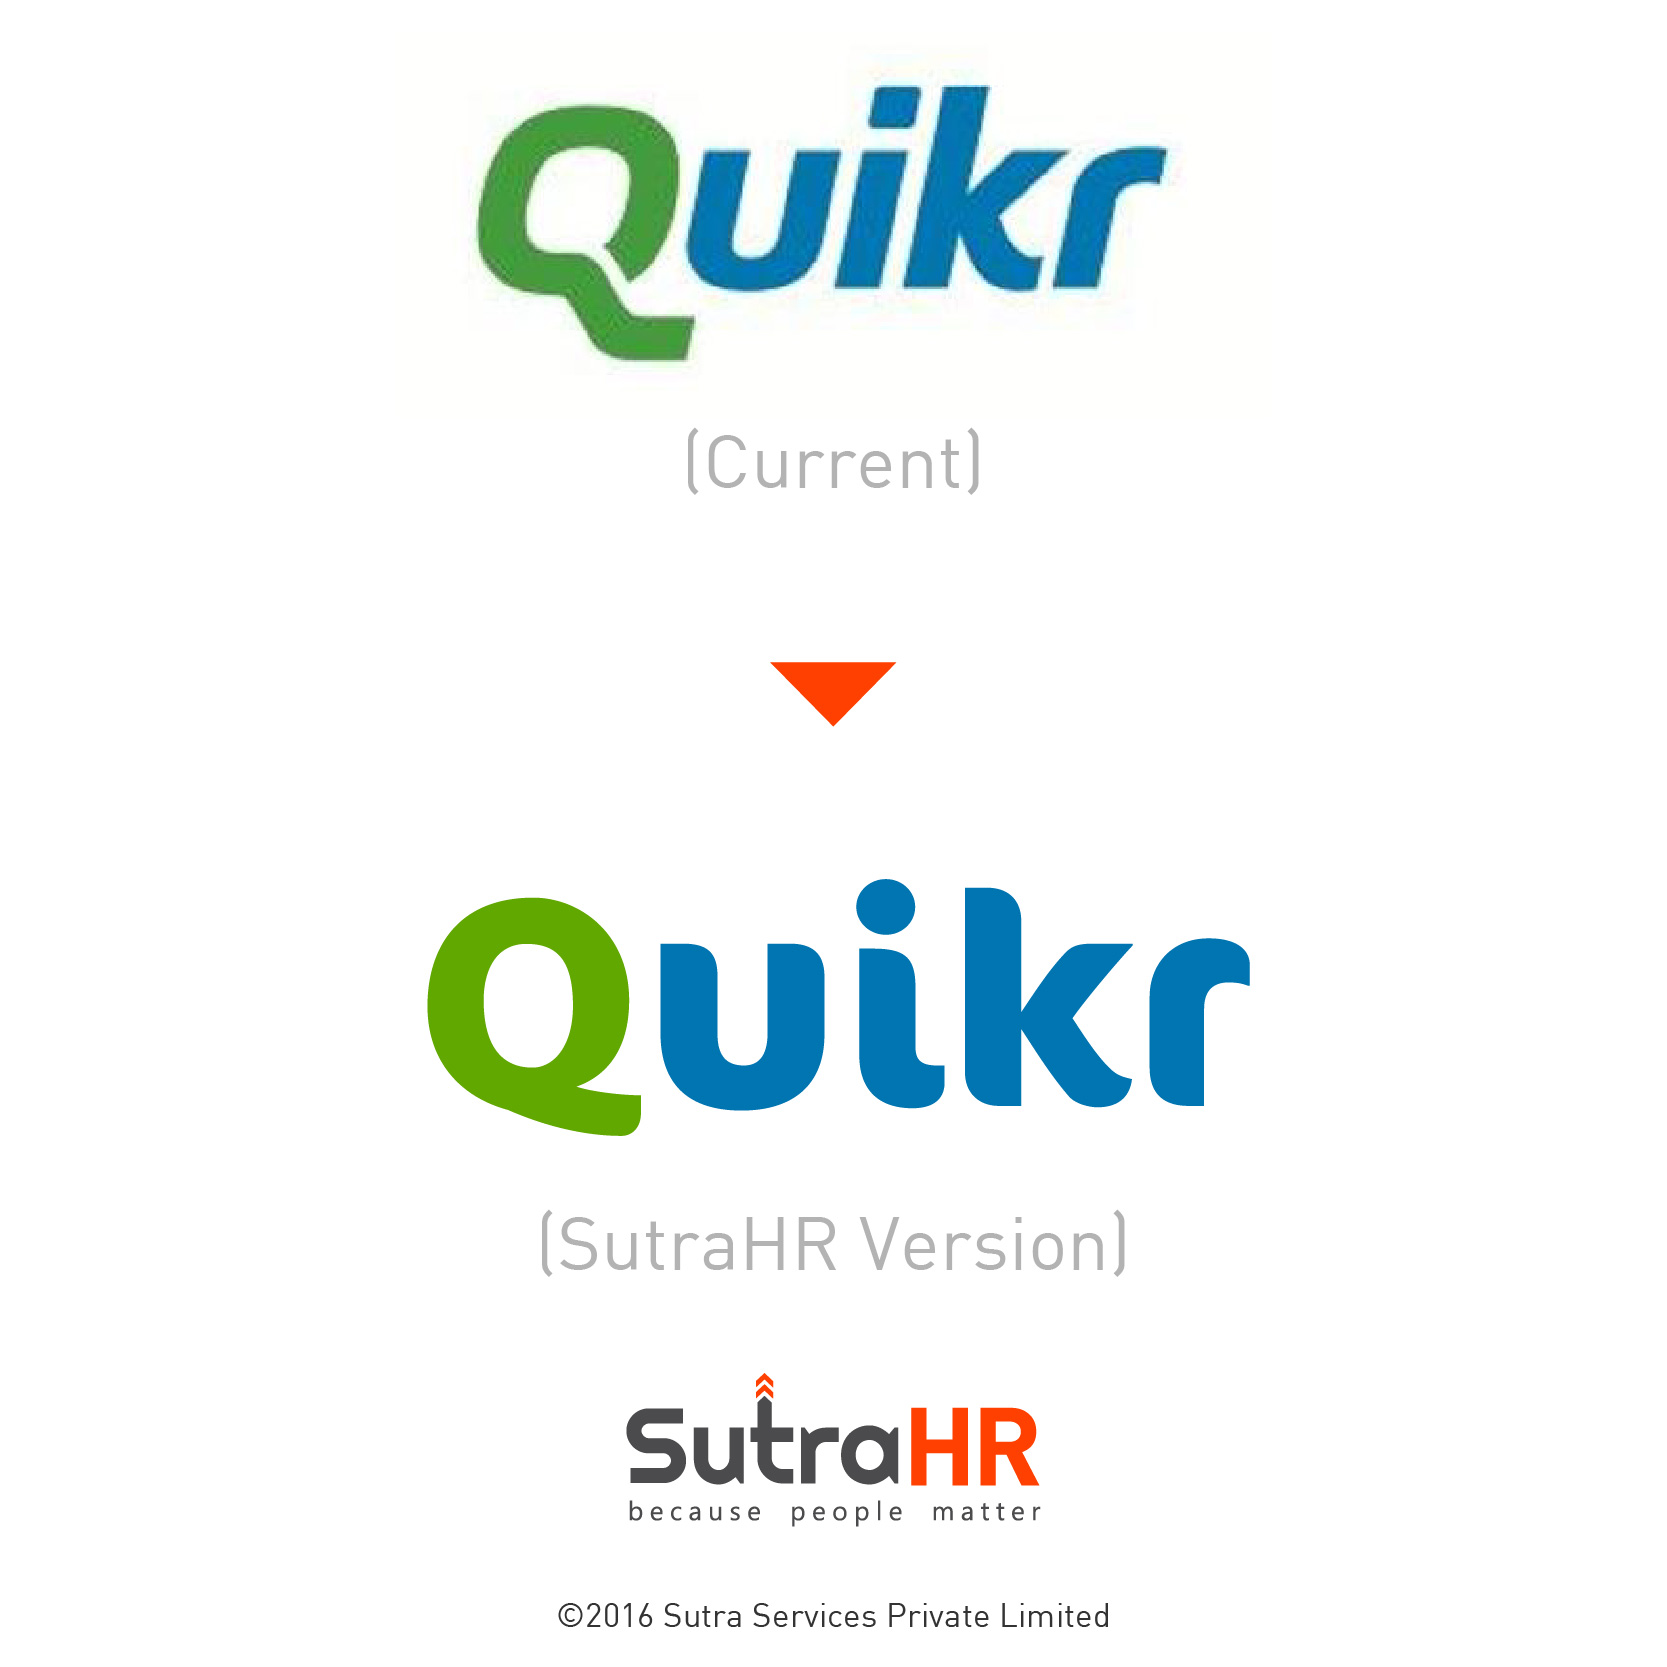 quikr startup logo redesigned